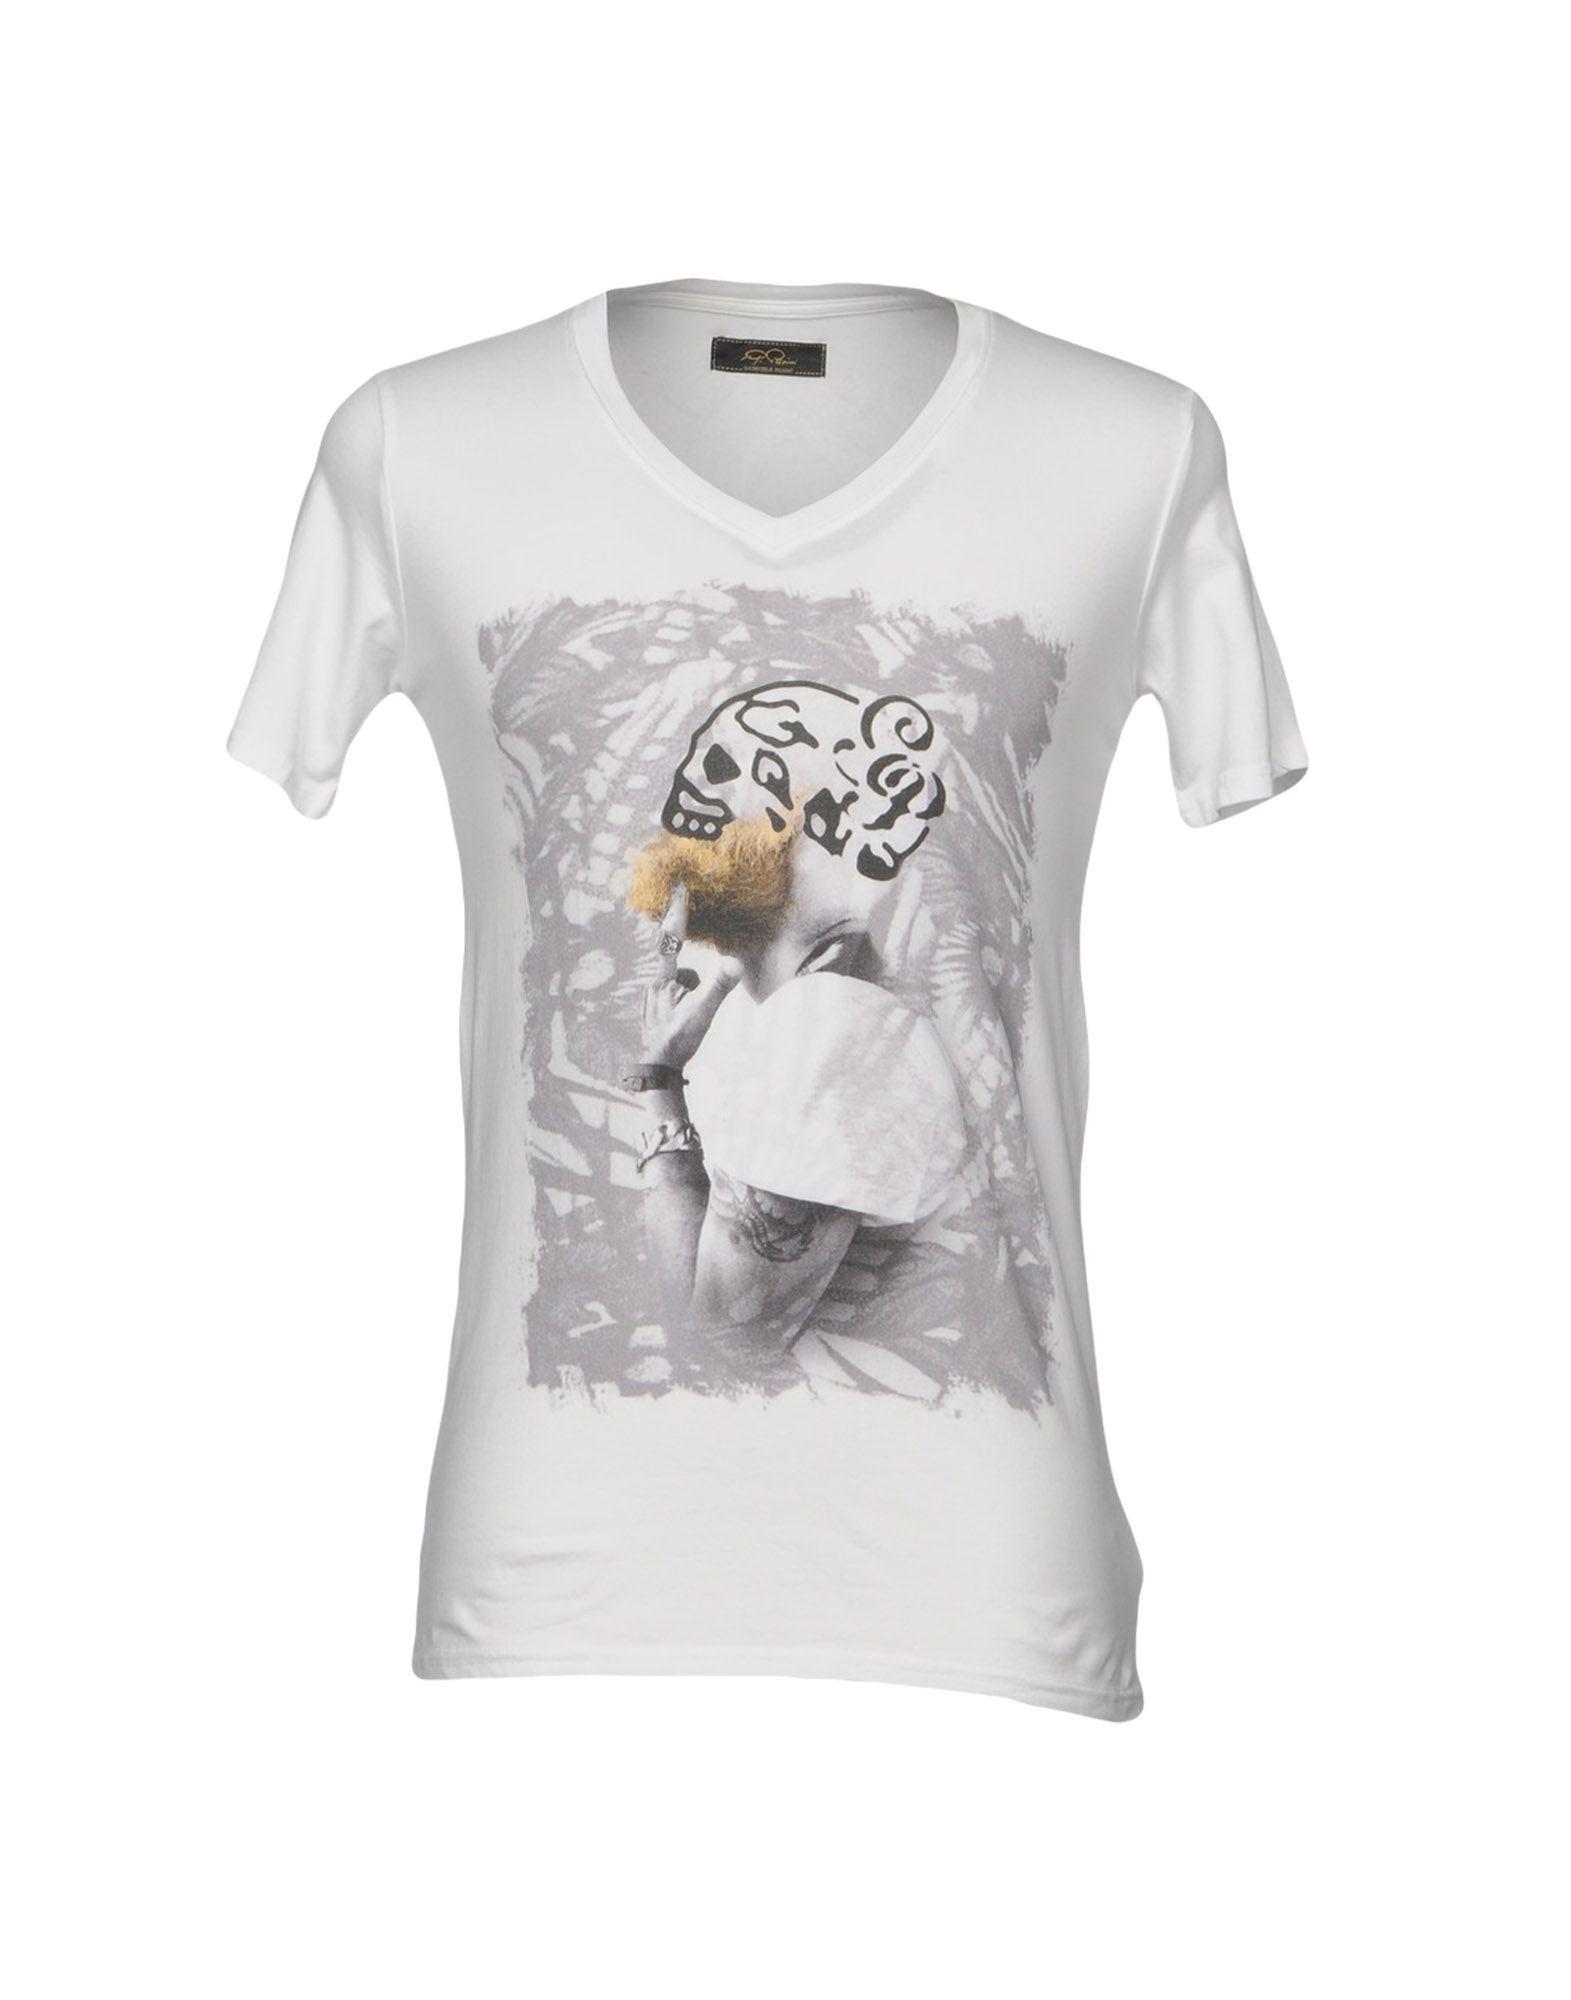 Gabriele Pasini Cotton T-shirt in White for Men - Lyst